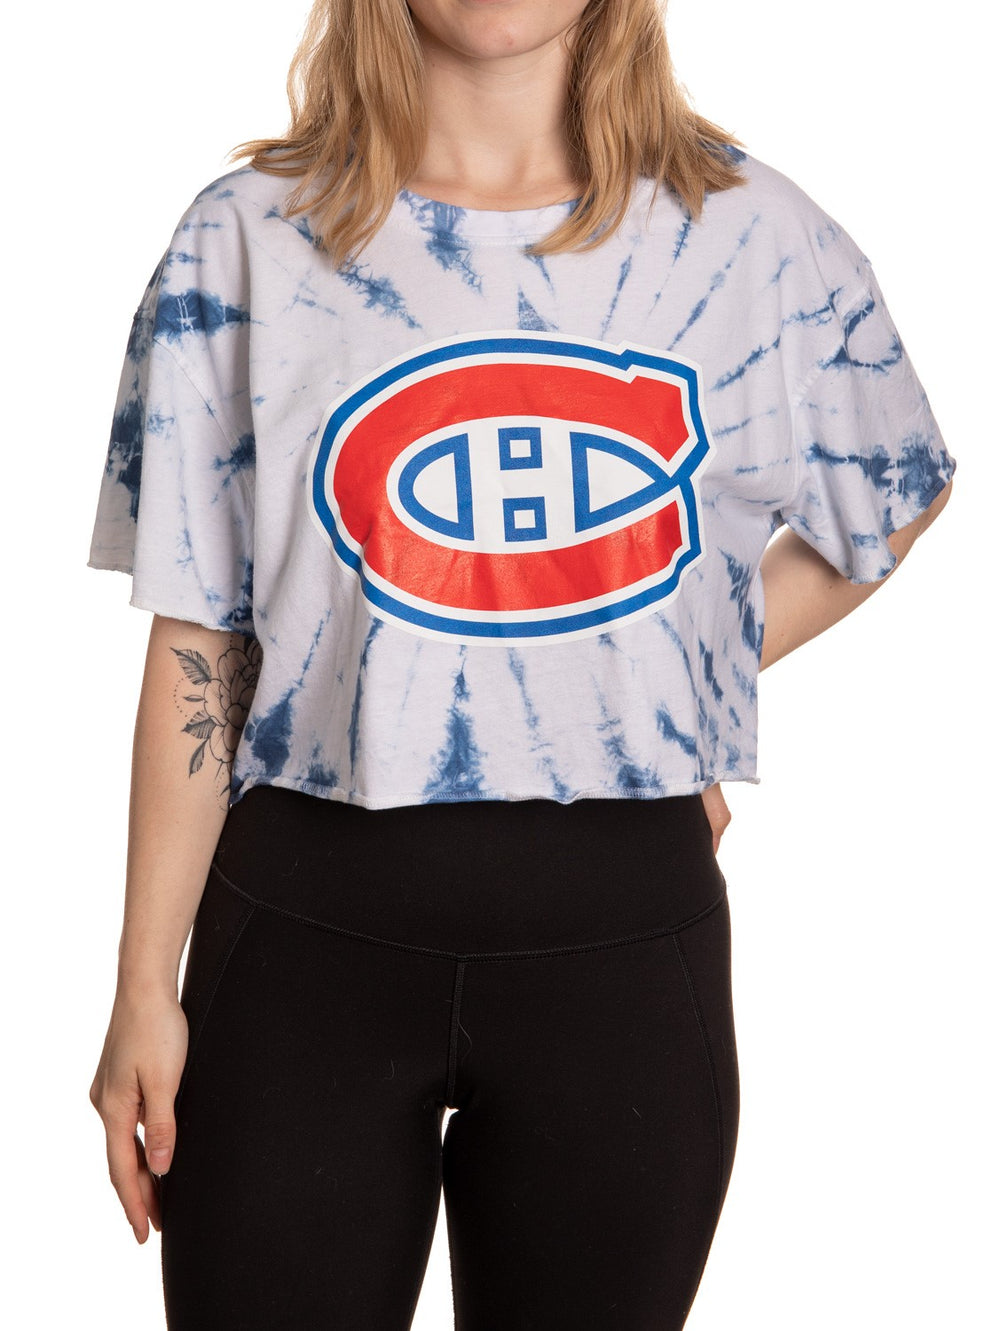 Montreal Canadiens Spiral Tie Dye Crop Top Front View